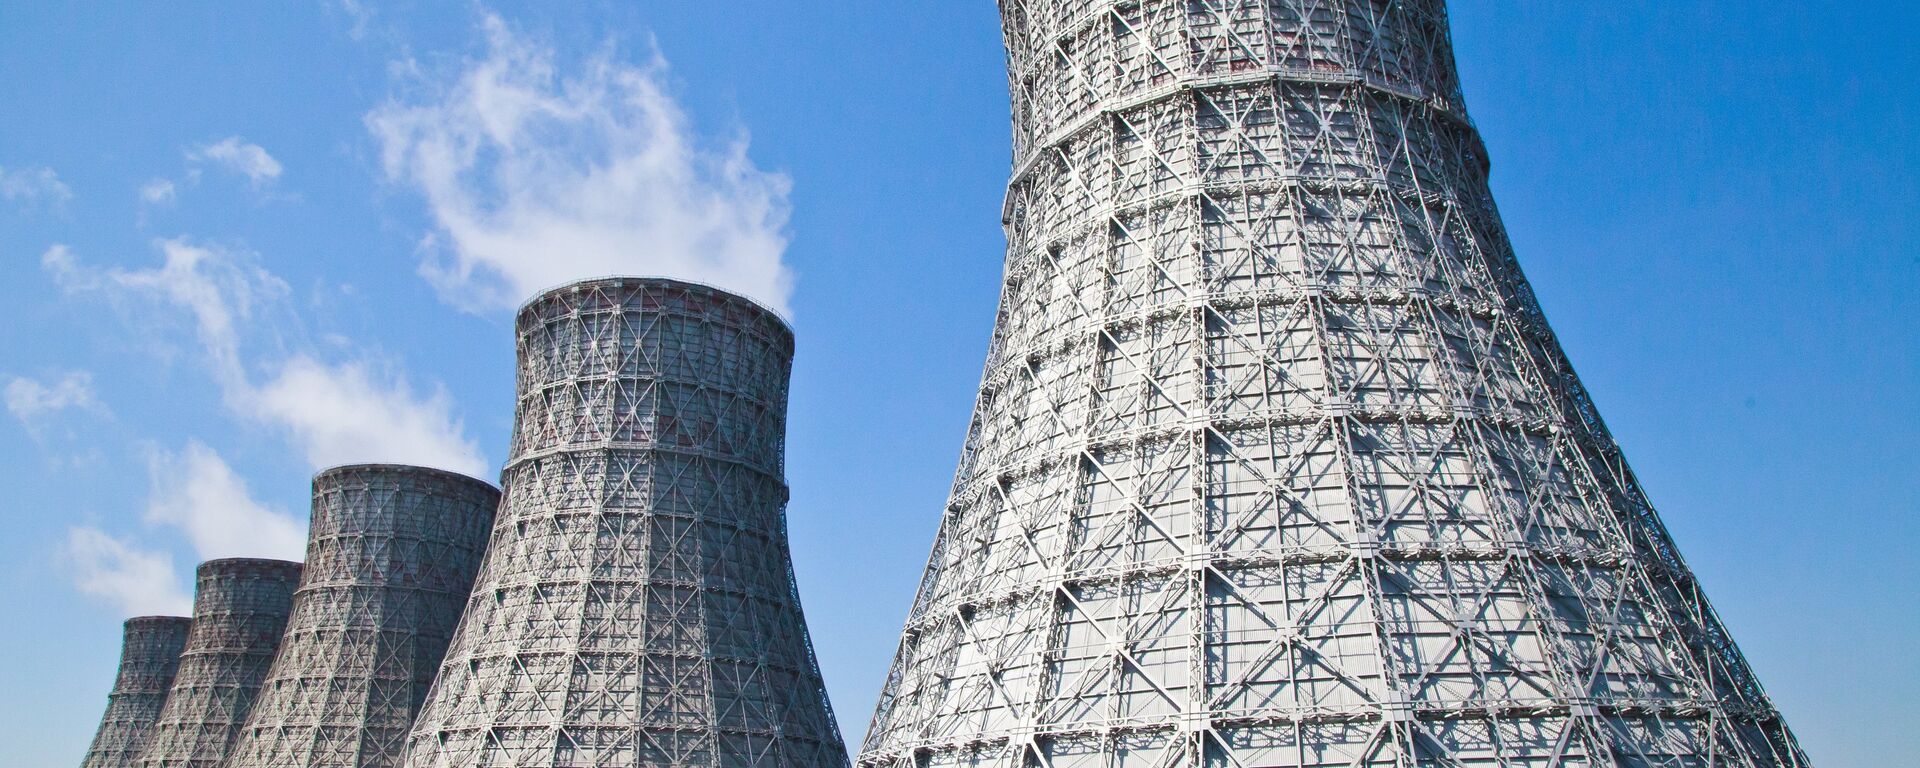 La planta nuclear rusa de Novovoronezh - Sputnik Mundo, 1920, 13.03.2019